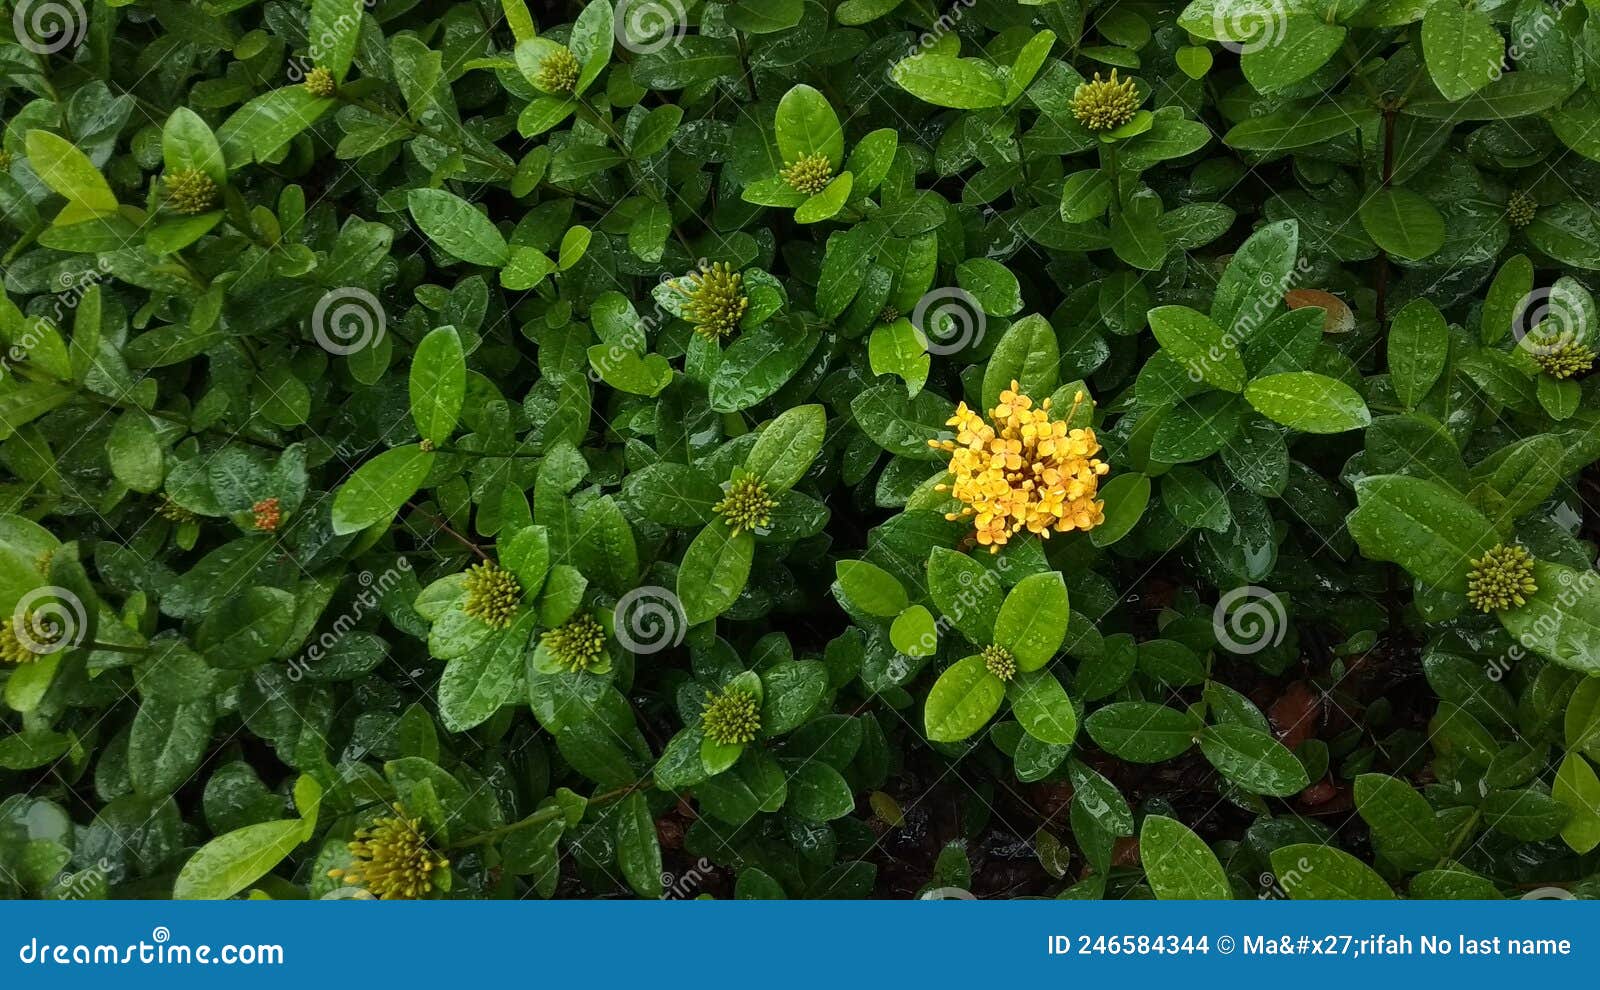 fresh and beautiful ixora jungle geranium from the park after heavy rain season